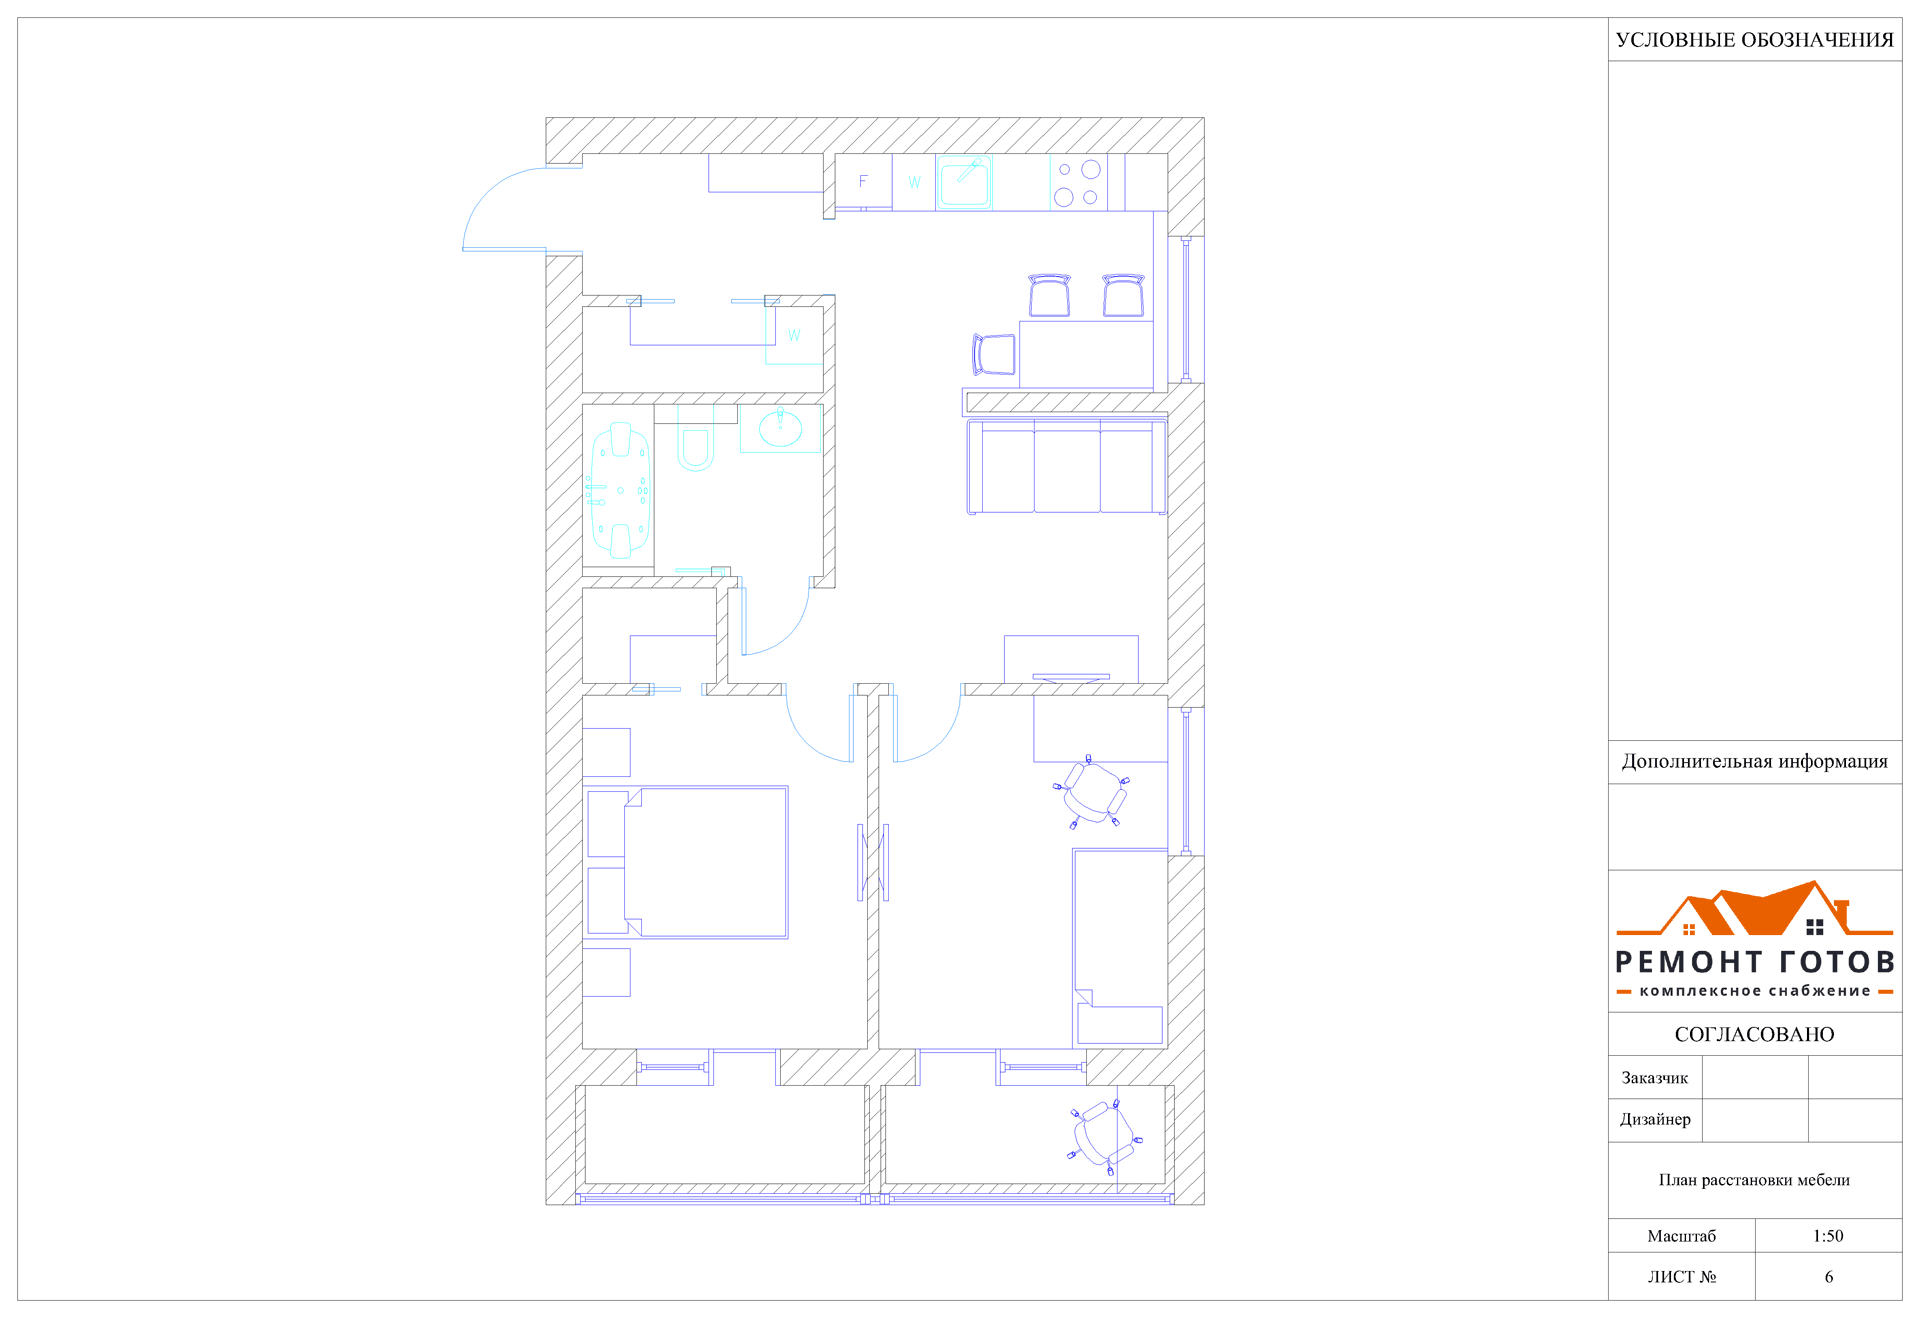 технический дизайн-проект ремонта квартиры — план мебели и сантехники в квартире фото